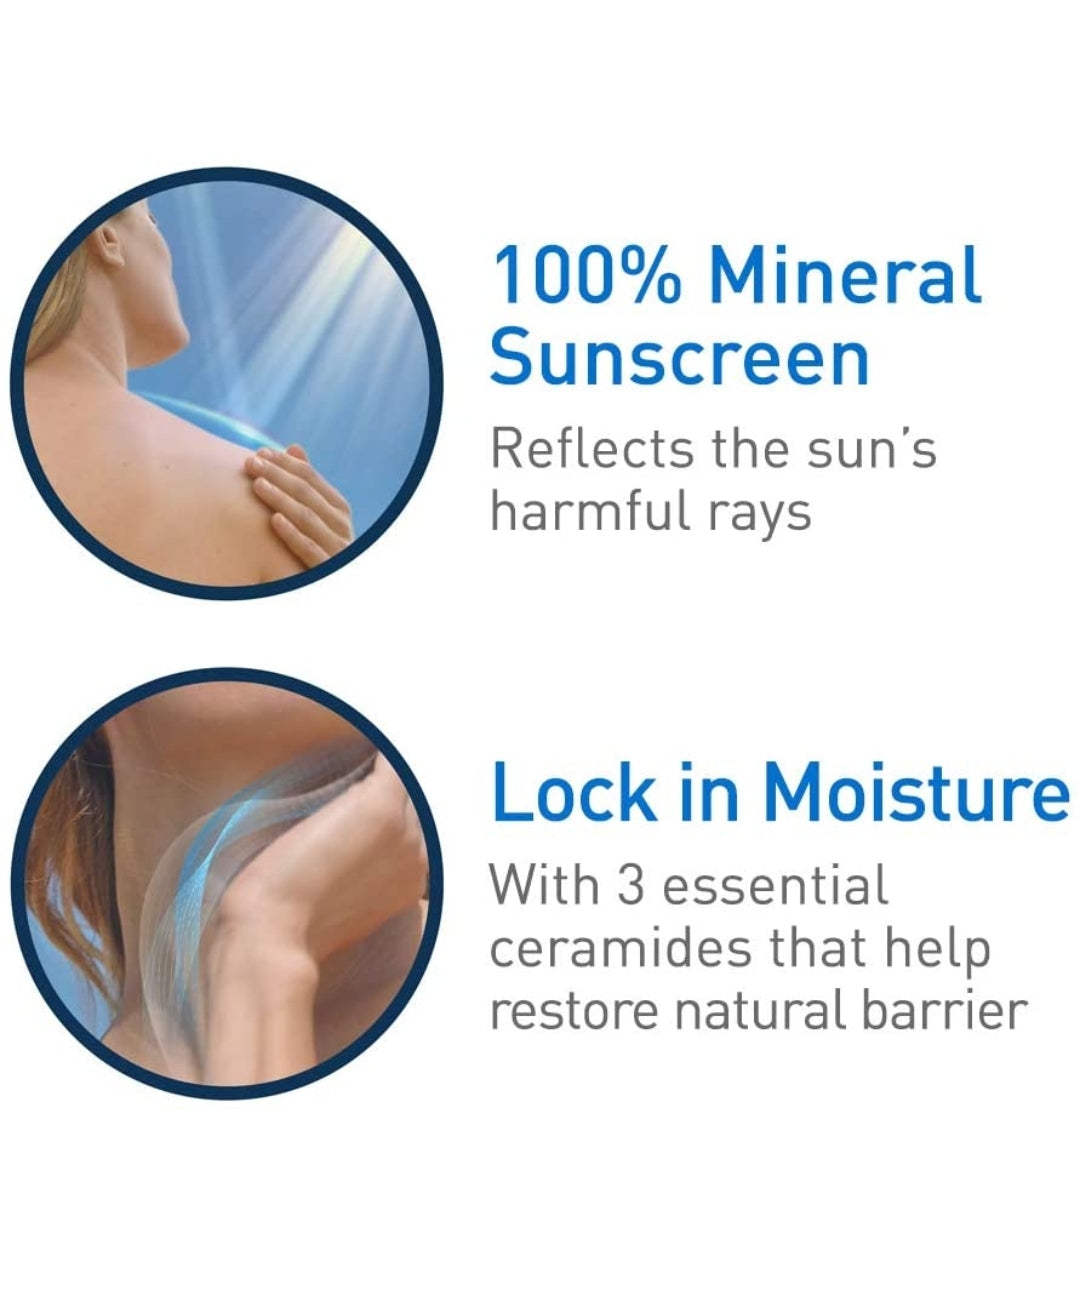 CeraVe 100% Mineral Sunscreen SPF 50 | Face Sunscreen with Zinc Oxide & Titanium Dioxide for Sensitive Skin